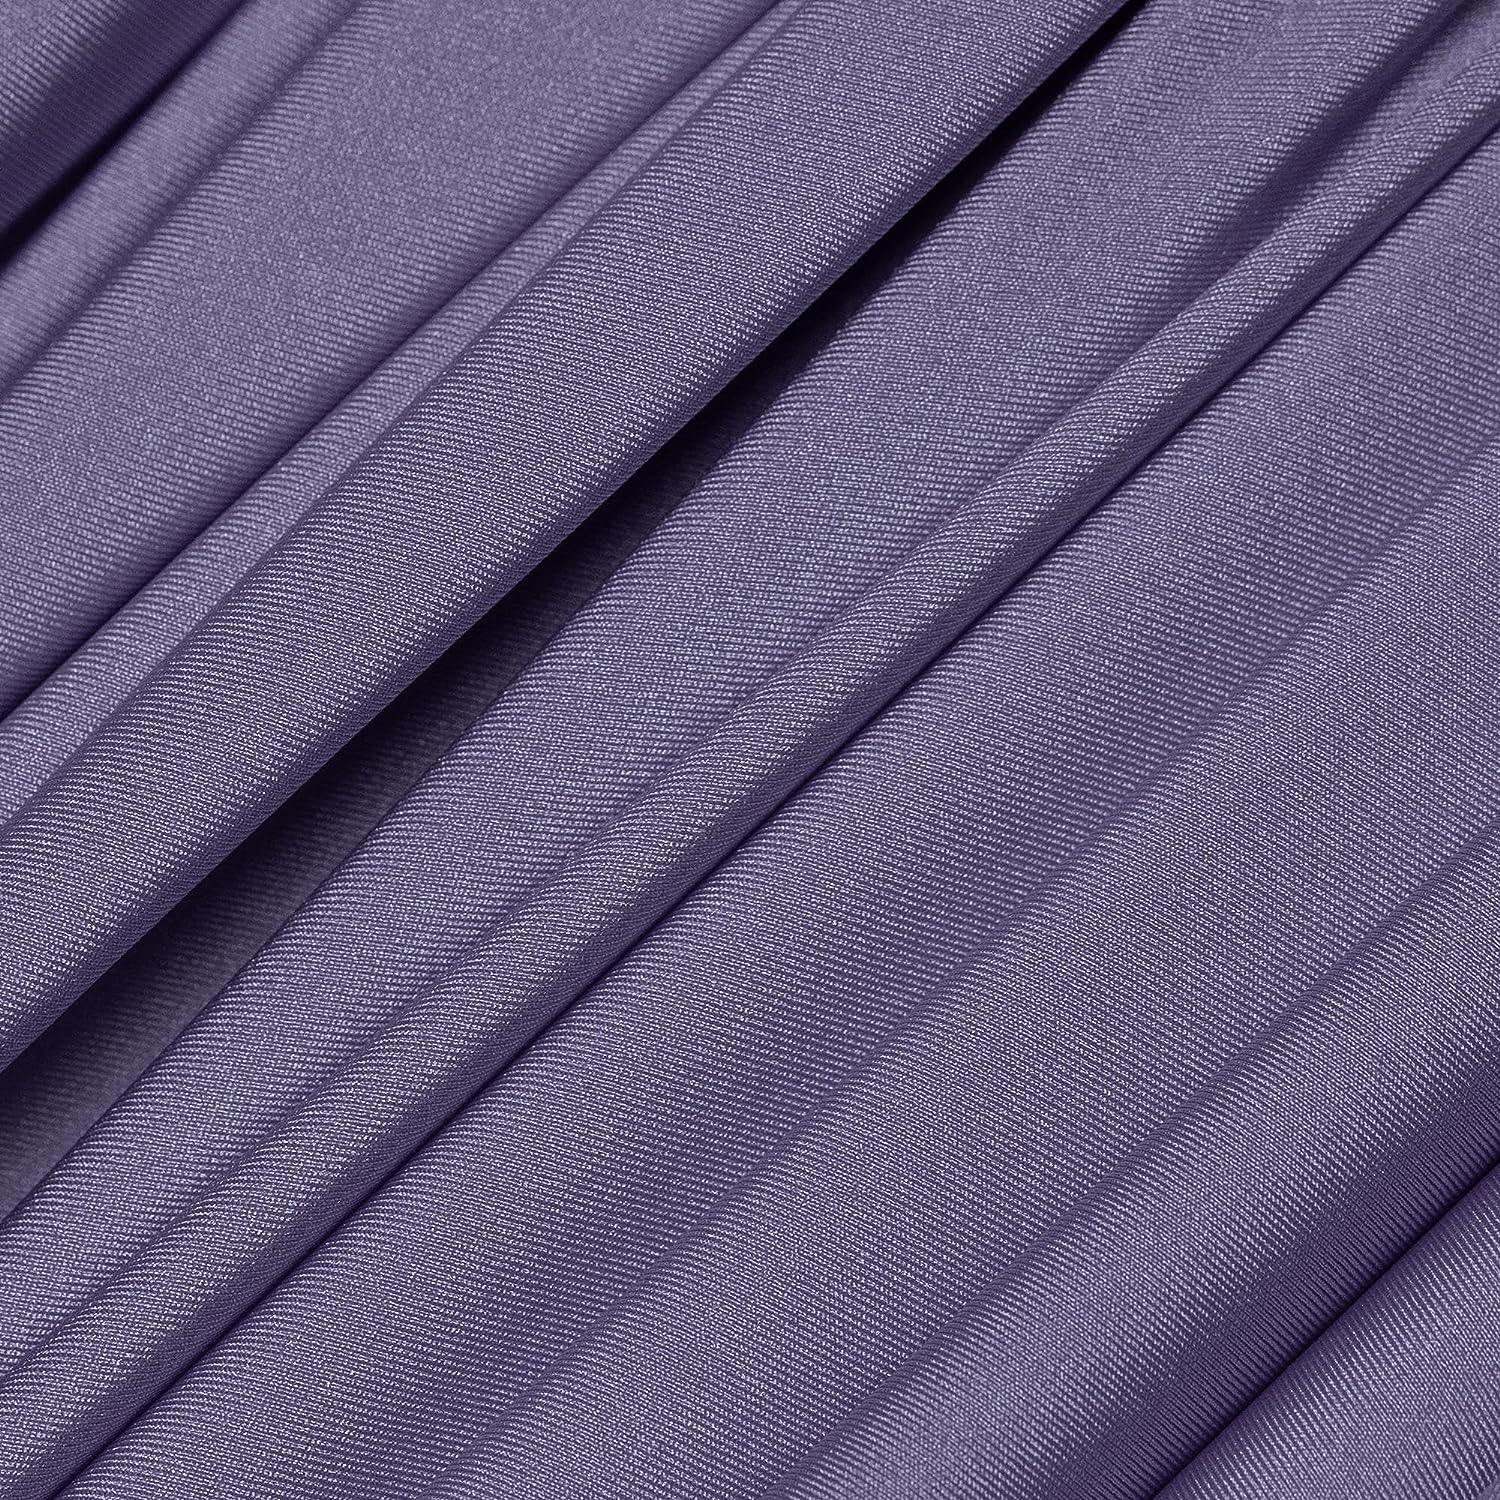 Premium Quality Swimsuit Fabric Nylon Spandex 4 Way Stretch